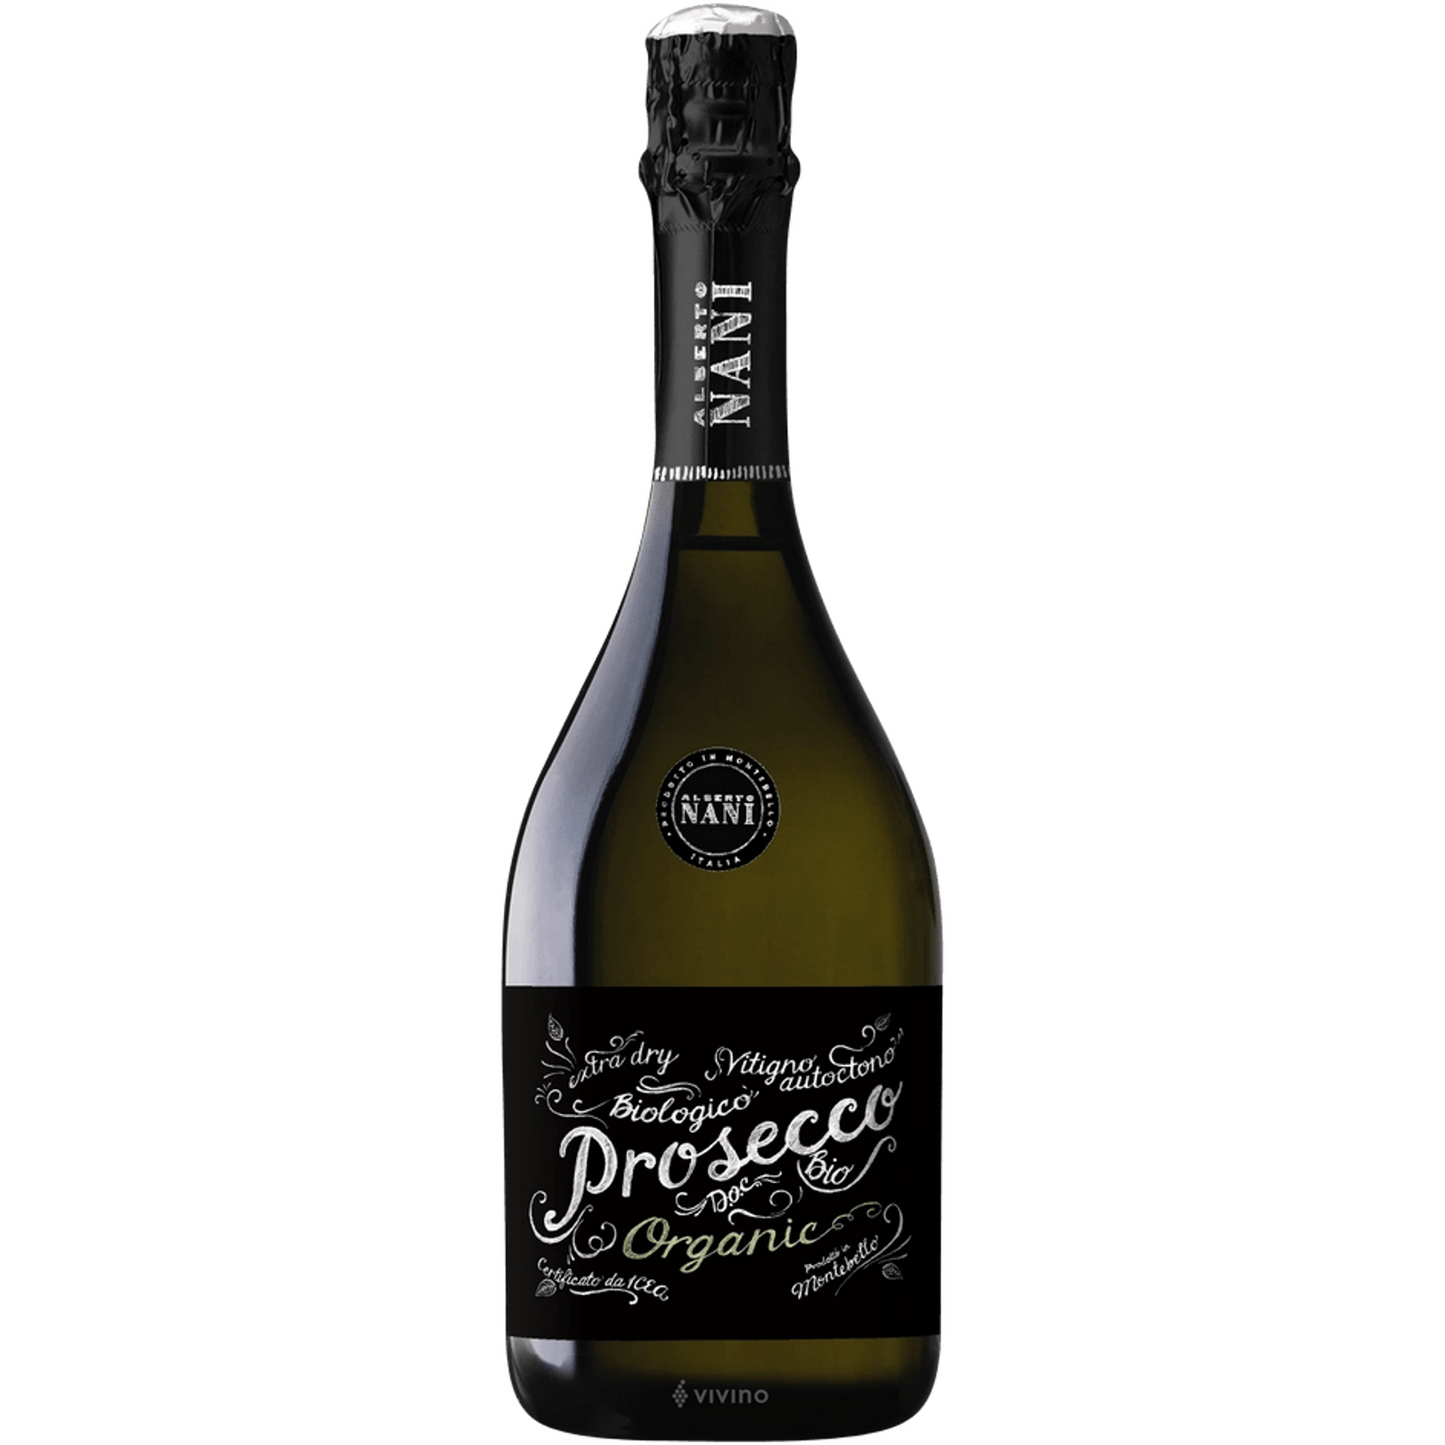 Selected Wine - Alberto Nani Prosecco (Organic Extra Dry)